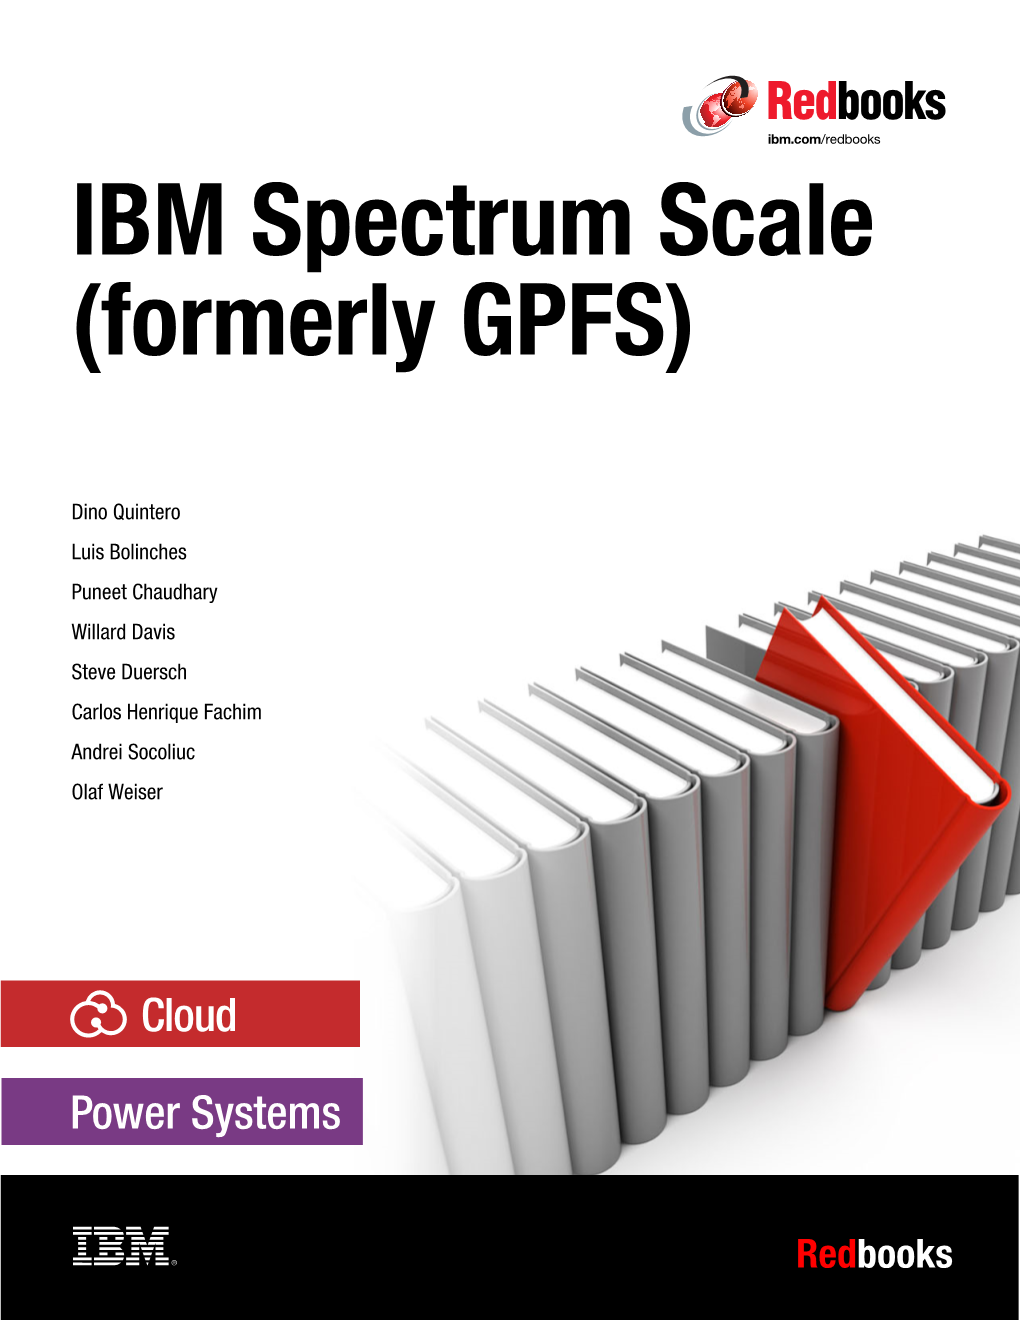 IBM Redbook IBM Spectrum Scale (Formerly GPFS)